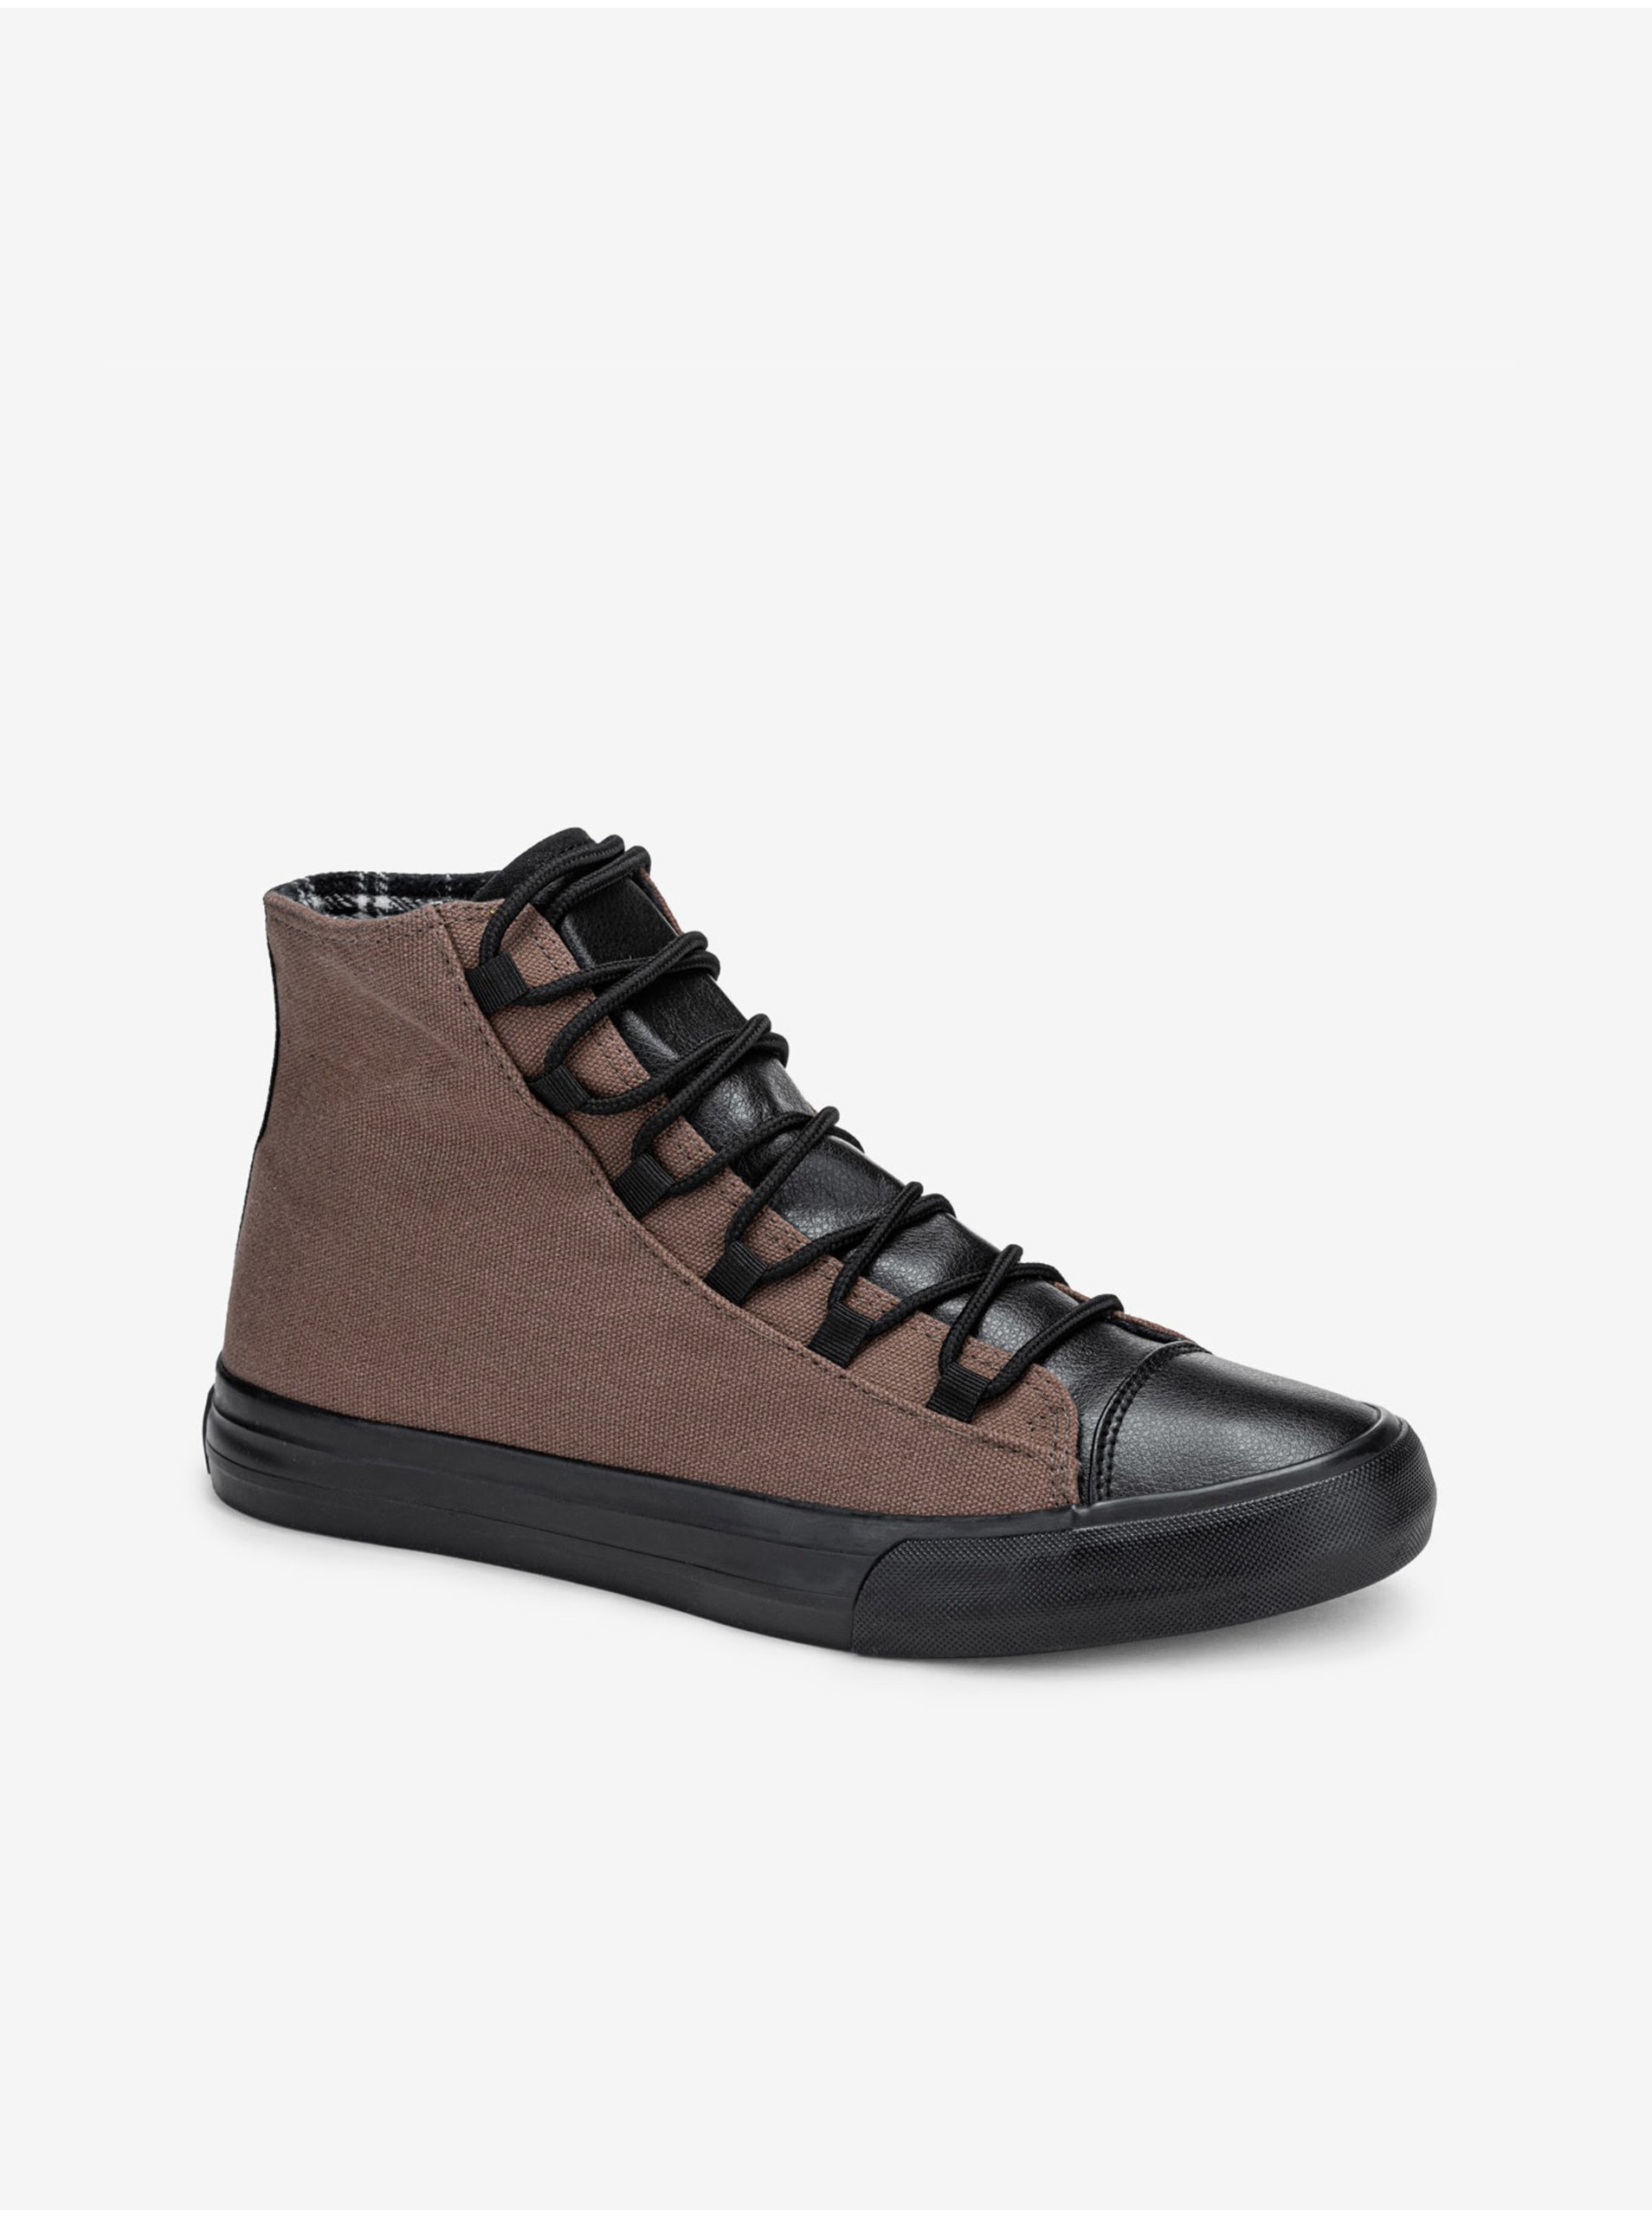 E-shop Čierno-hnedé pánske sneakers topánky Ombre Clothing T378